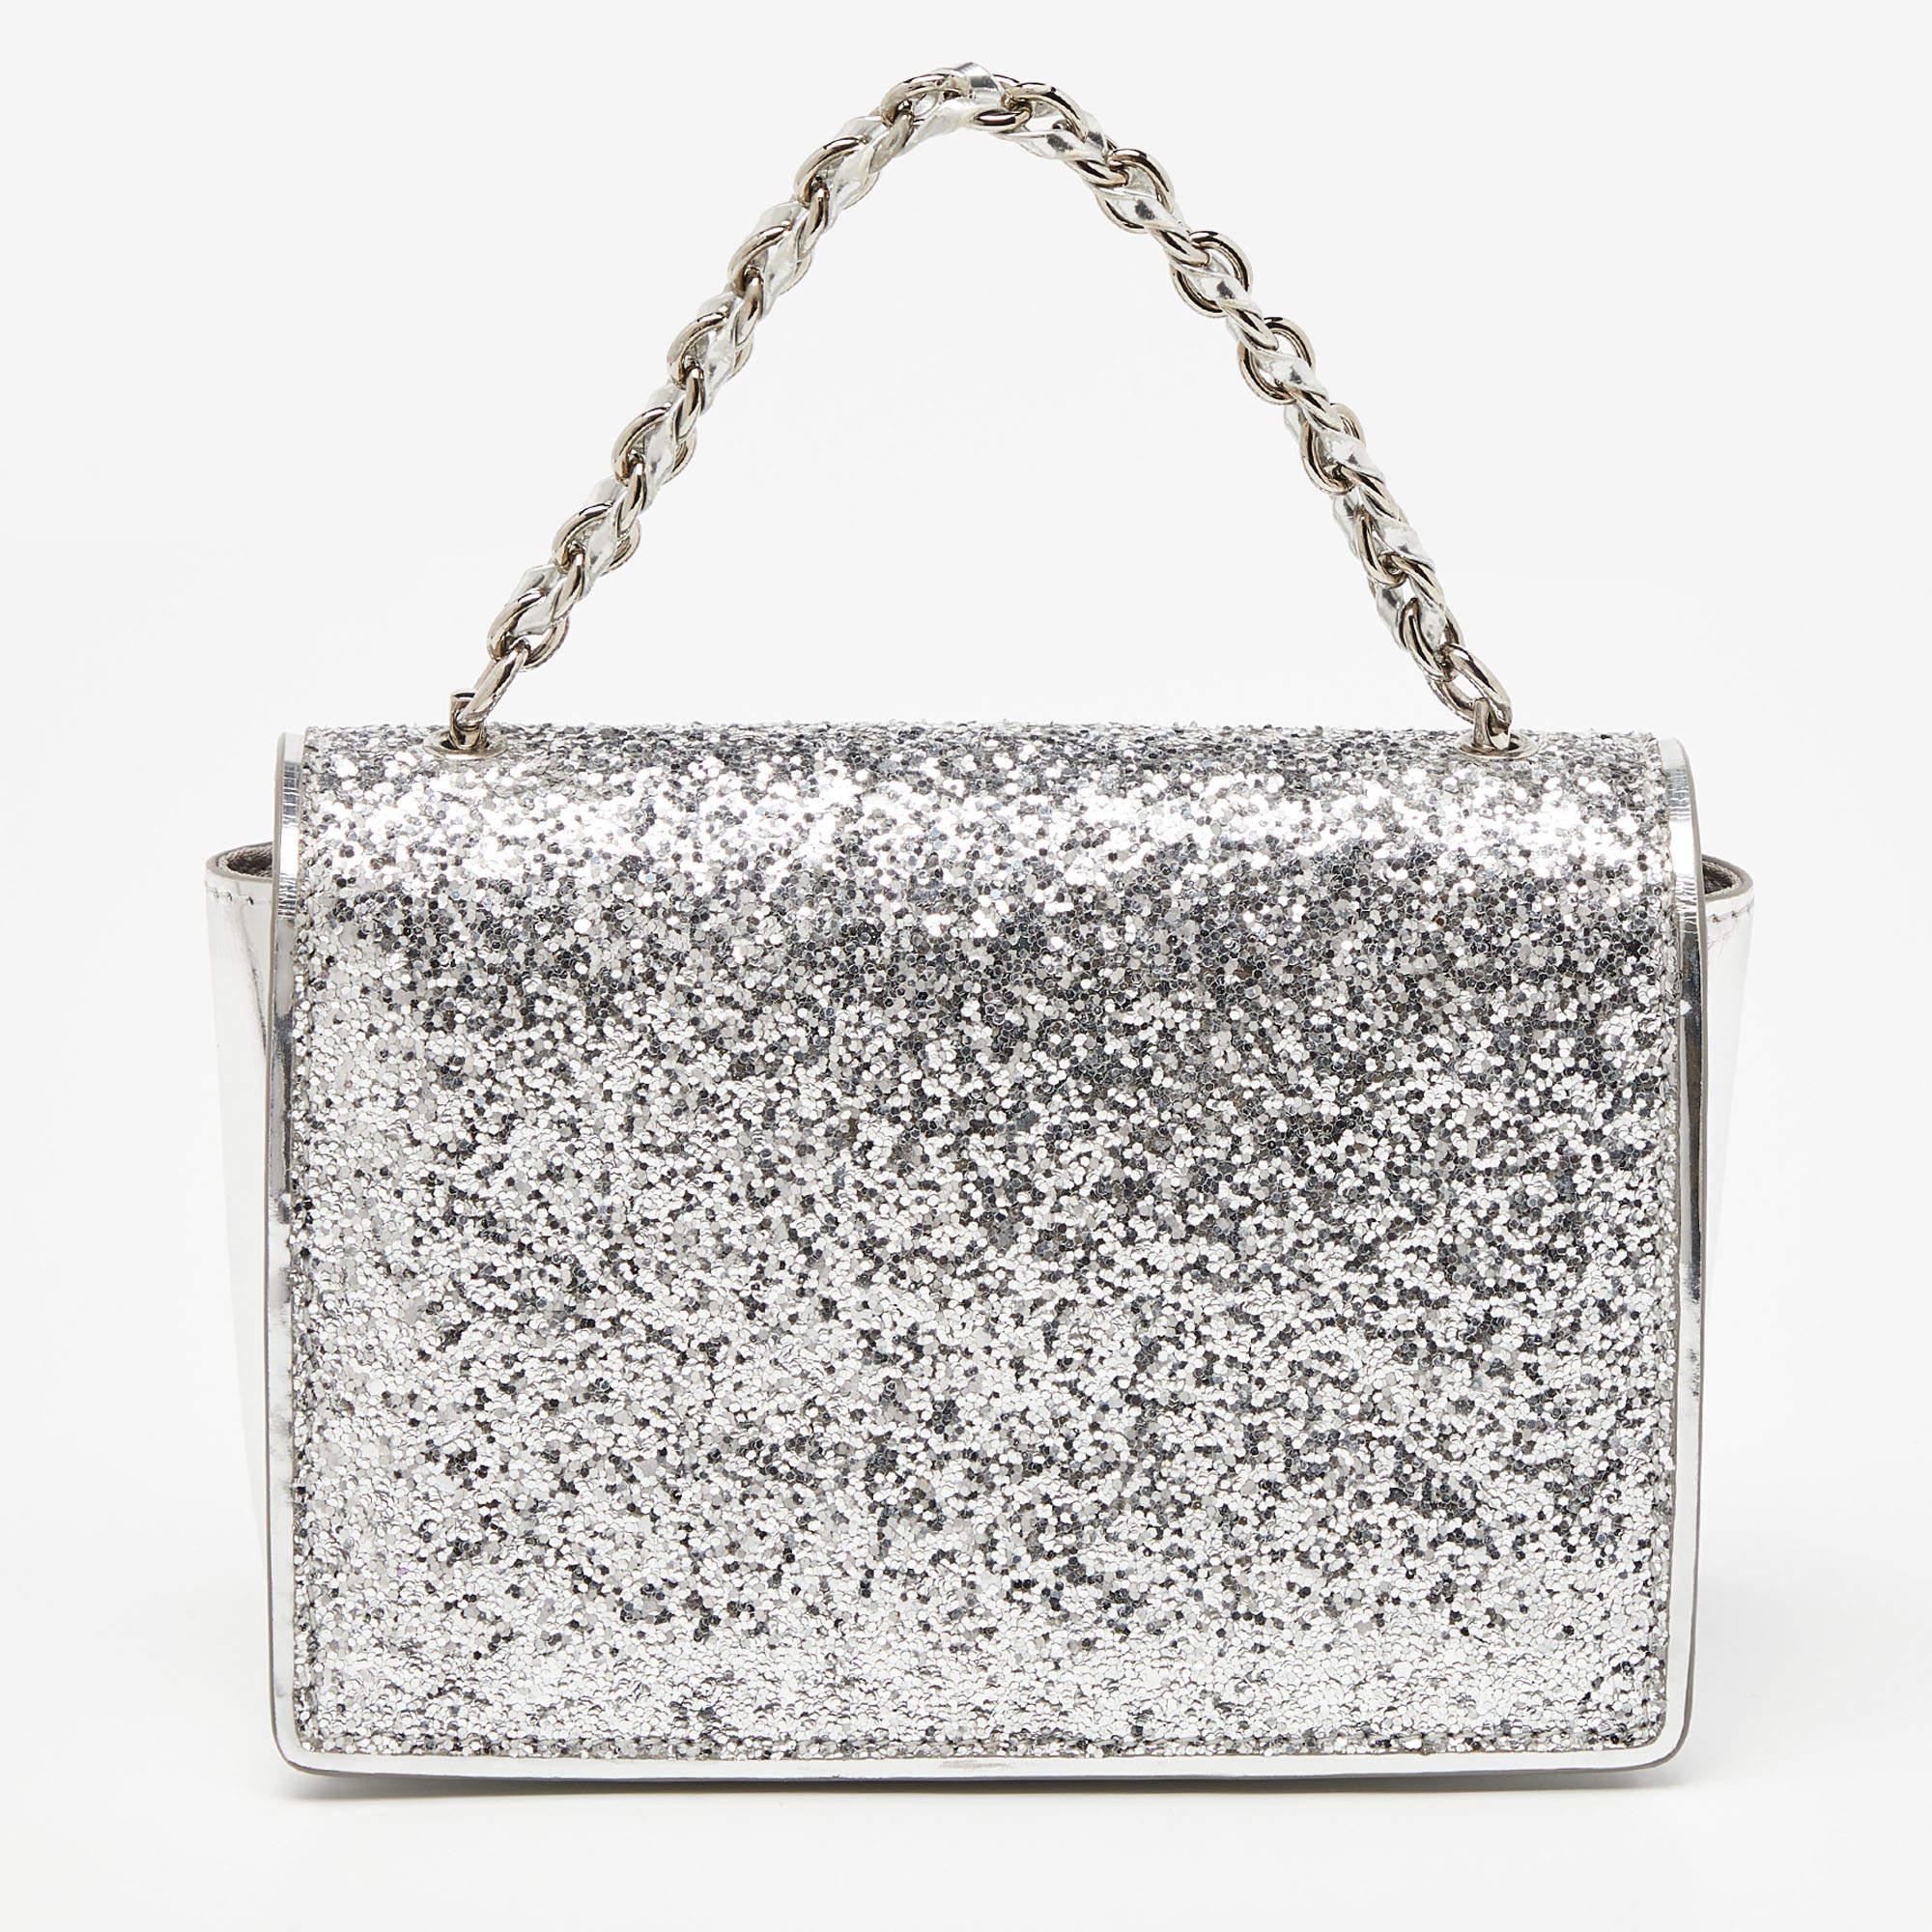 Salvatore Ferragamo Silver Glitter and Laminated Leather Top Handle Bag 1